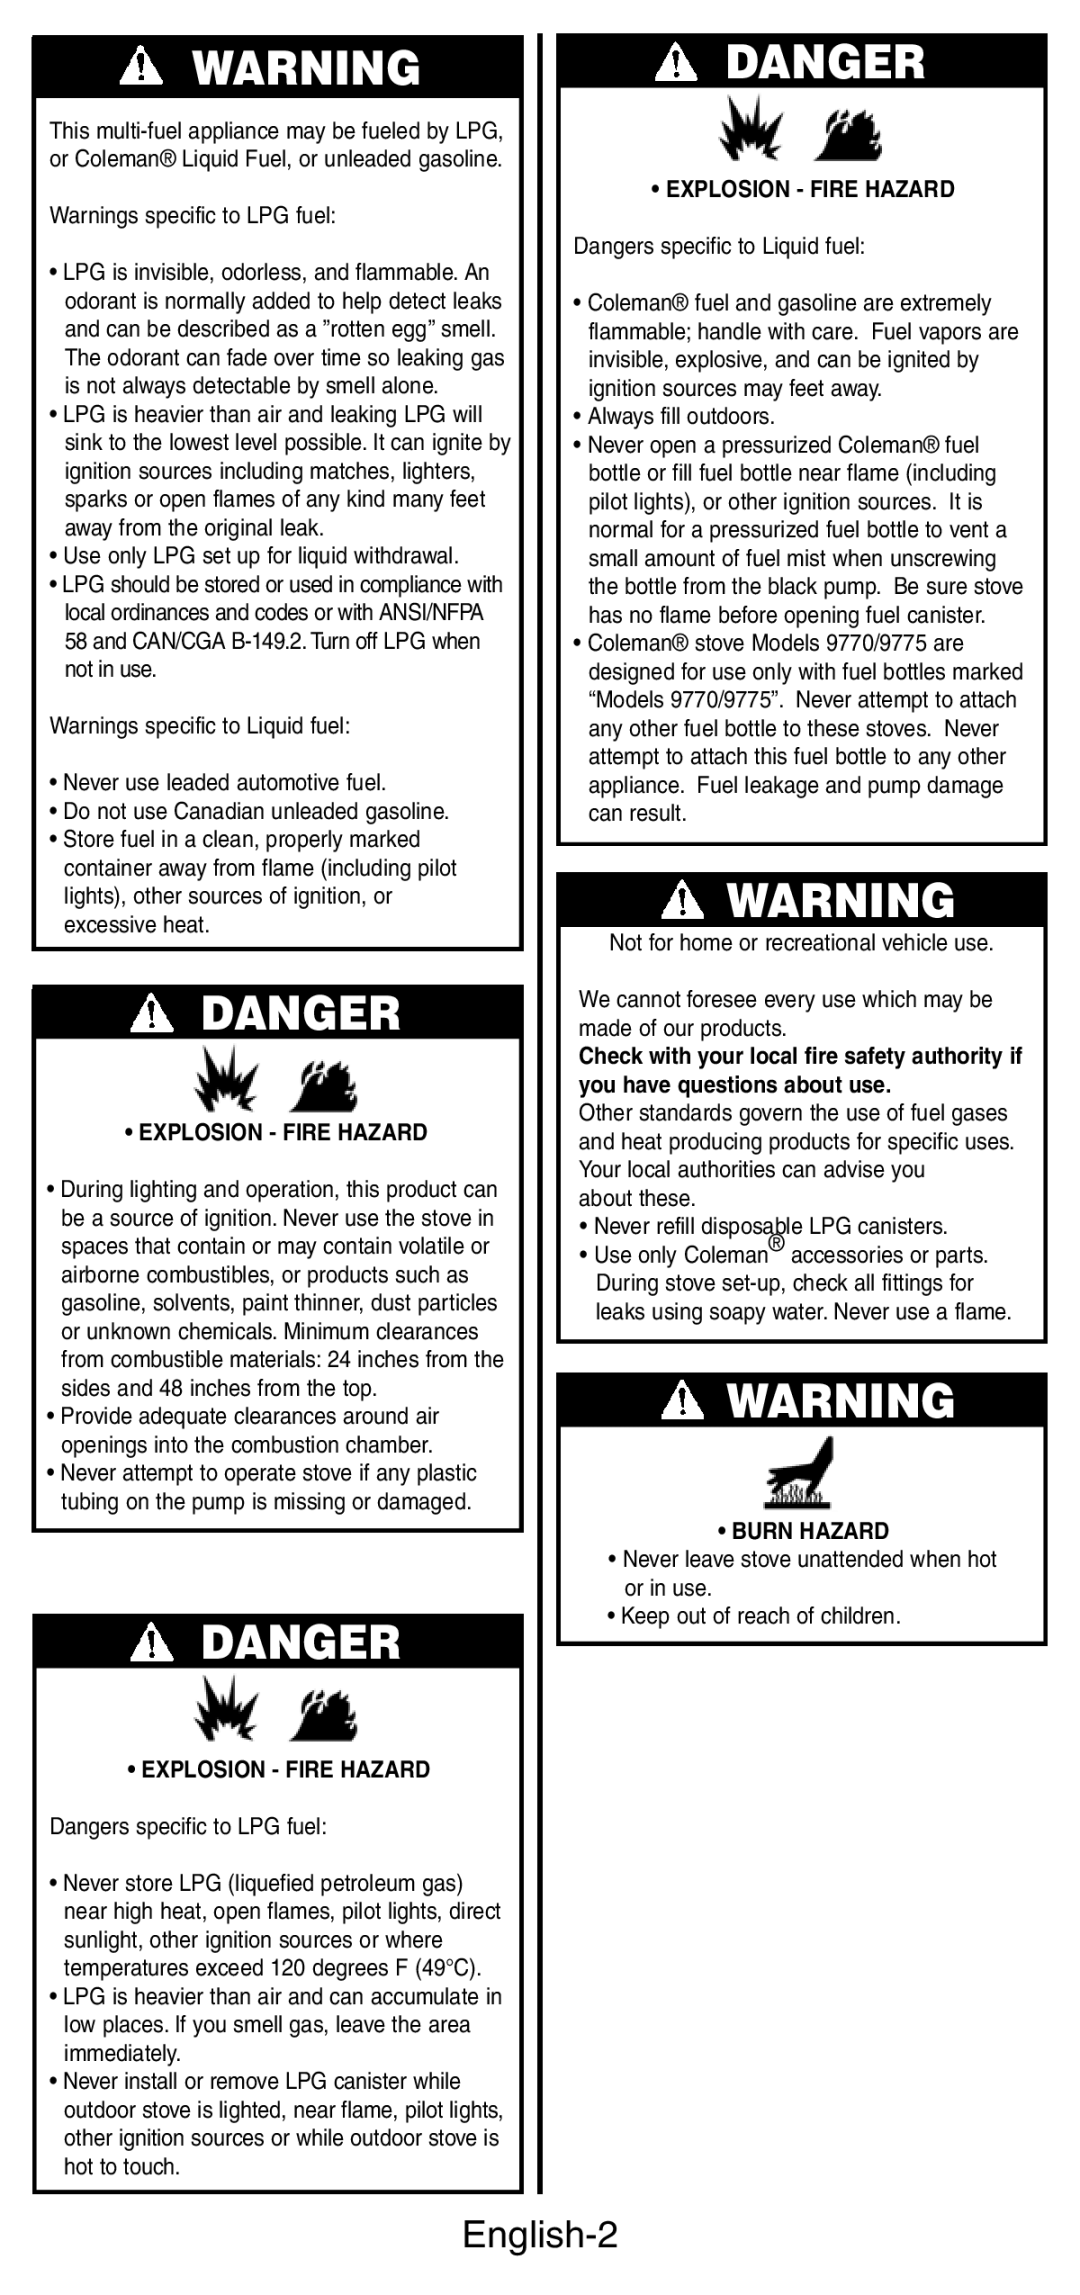 Coleman 9770, 9775 manual English-2, Danger, Explosion - Fire Hazard, Burn Hazard 